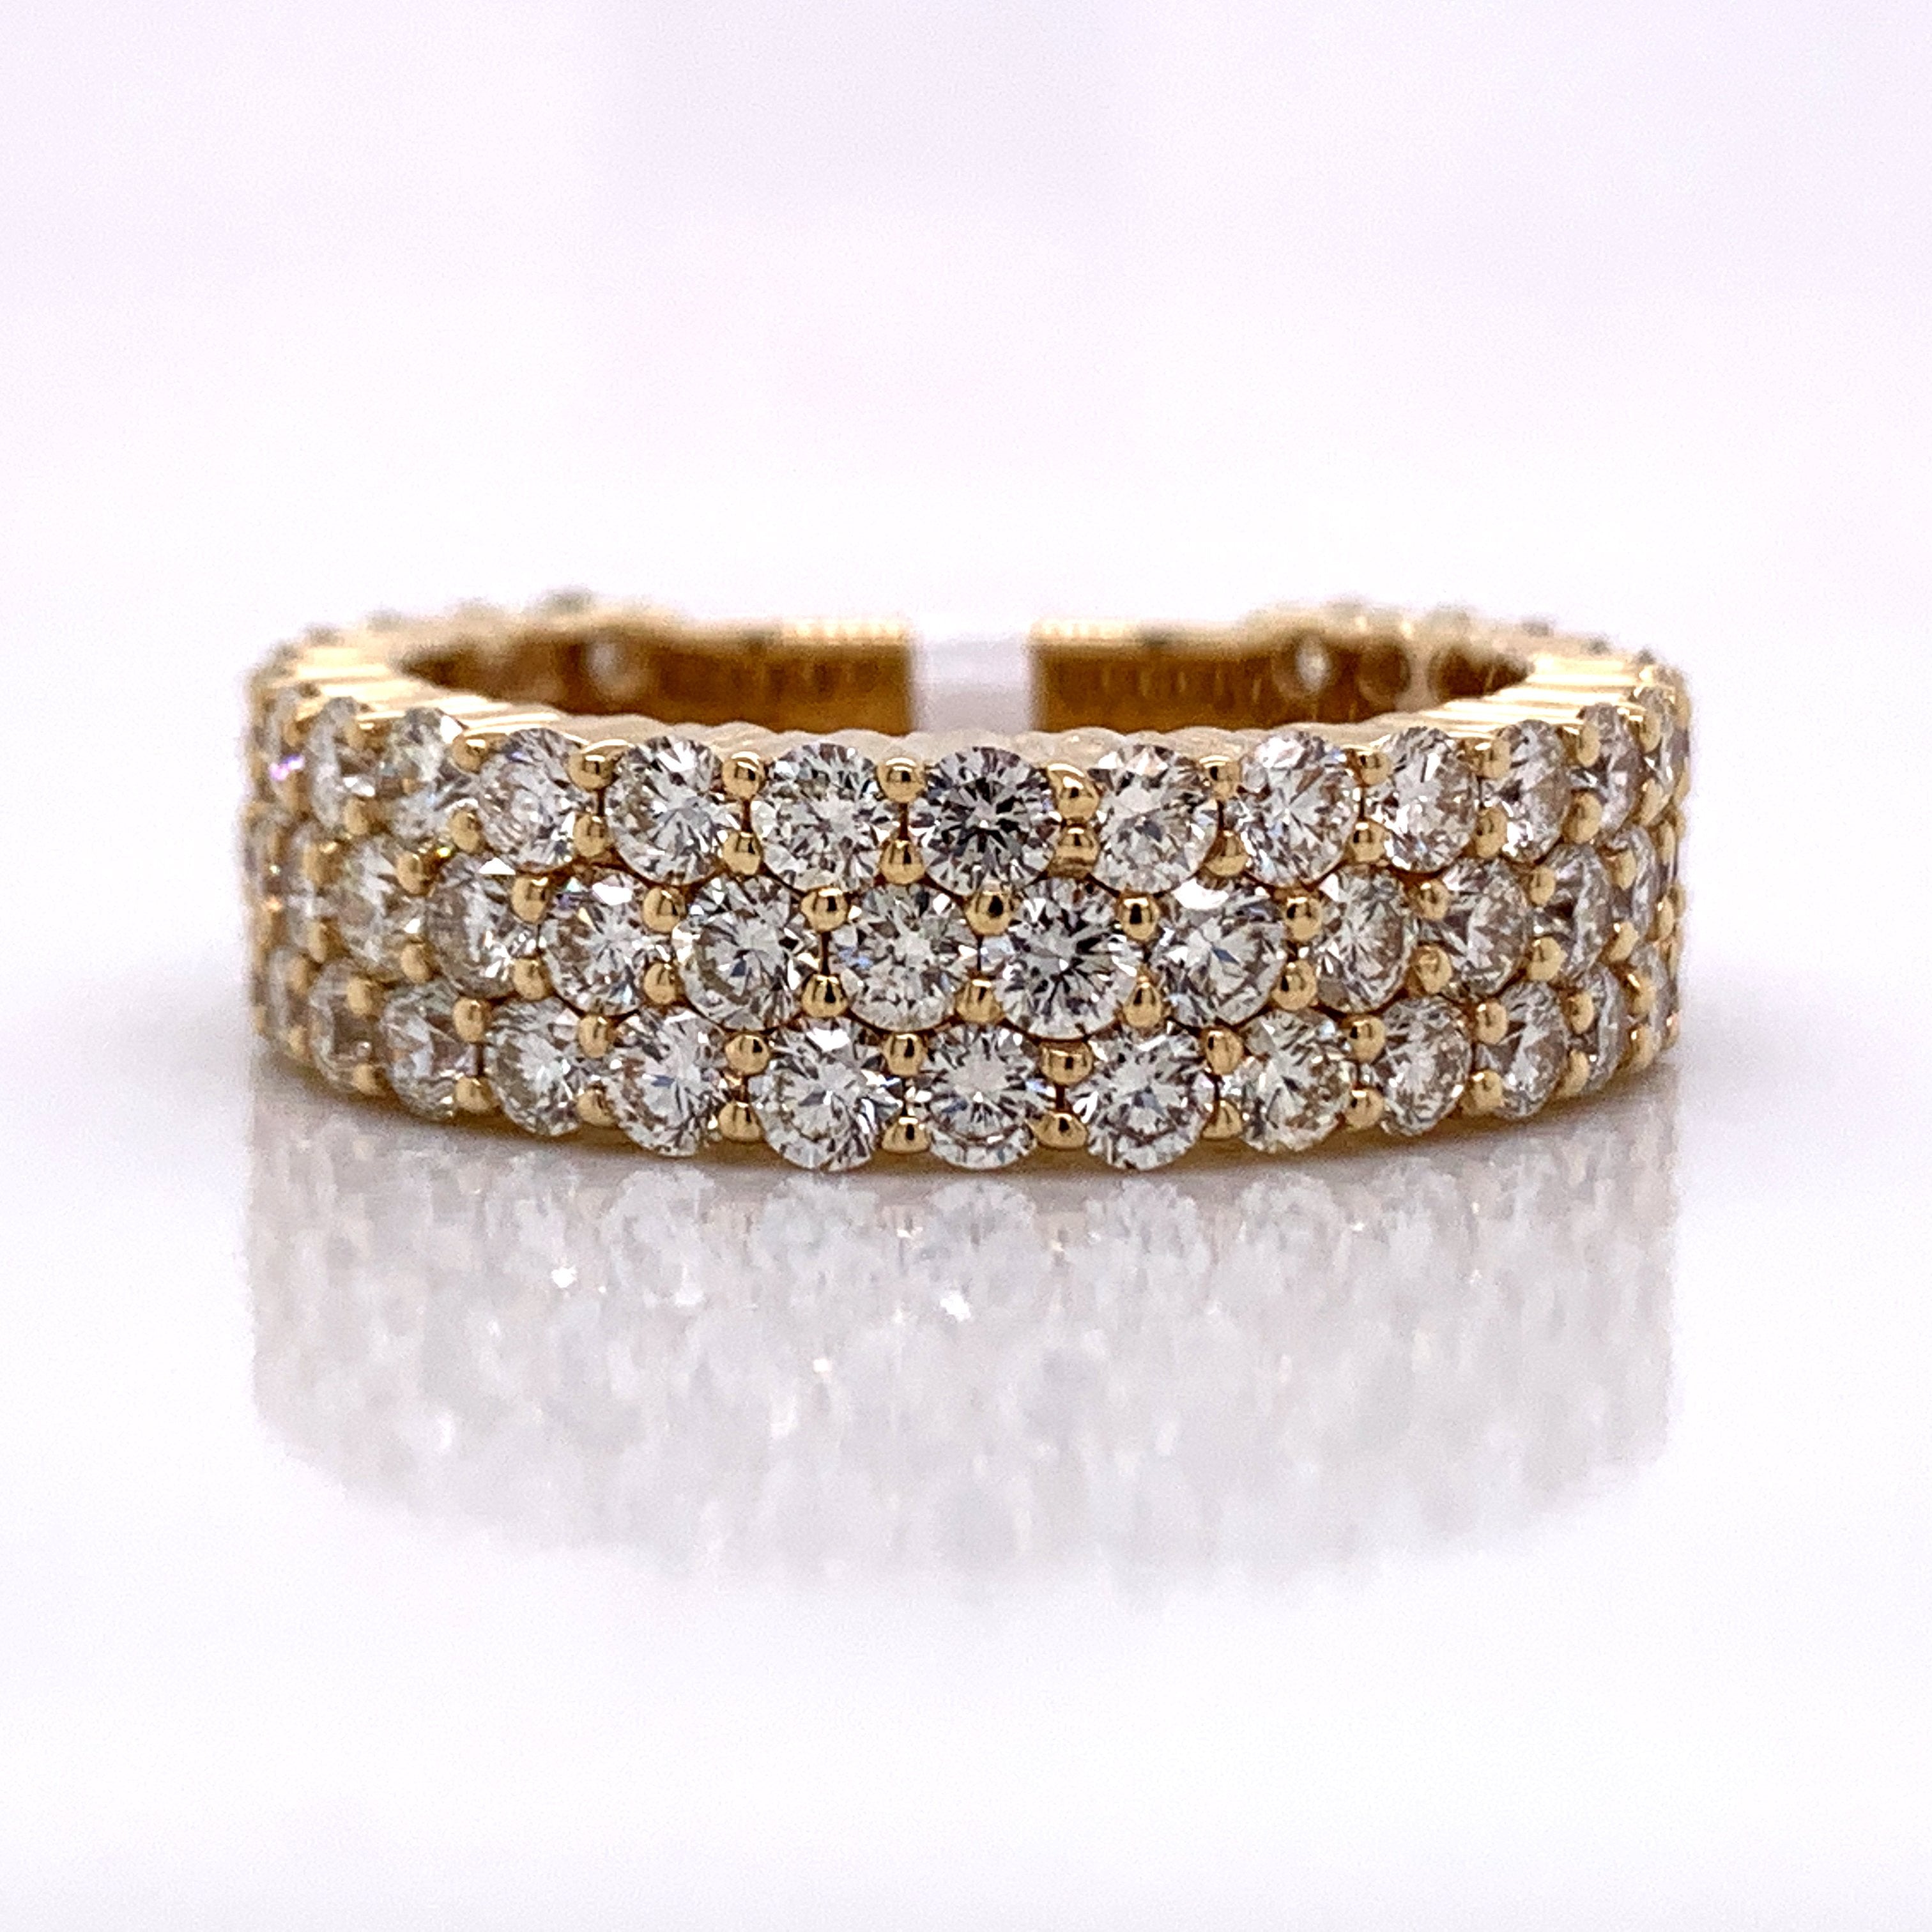 4.50 CT. Diamond Ring in 14K Gold - White Carat Diamonds 